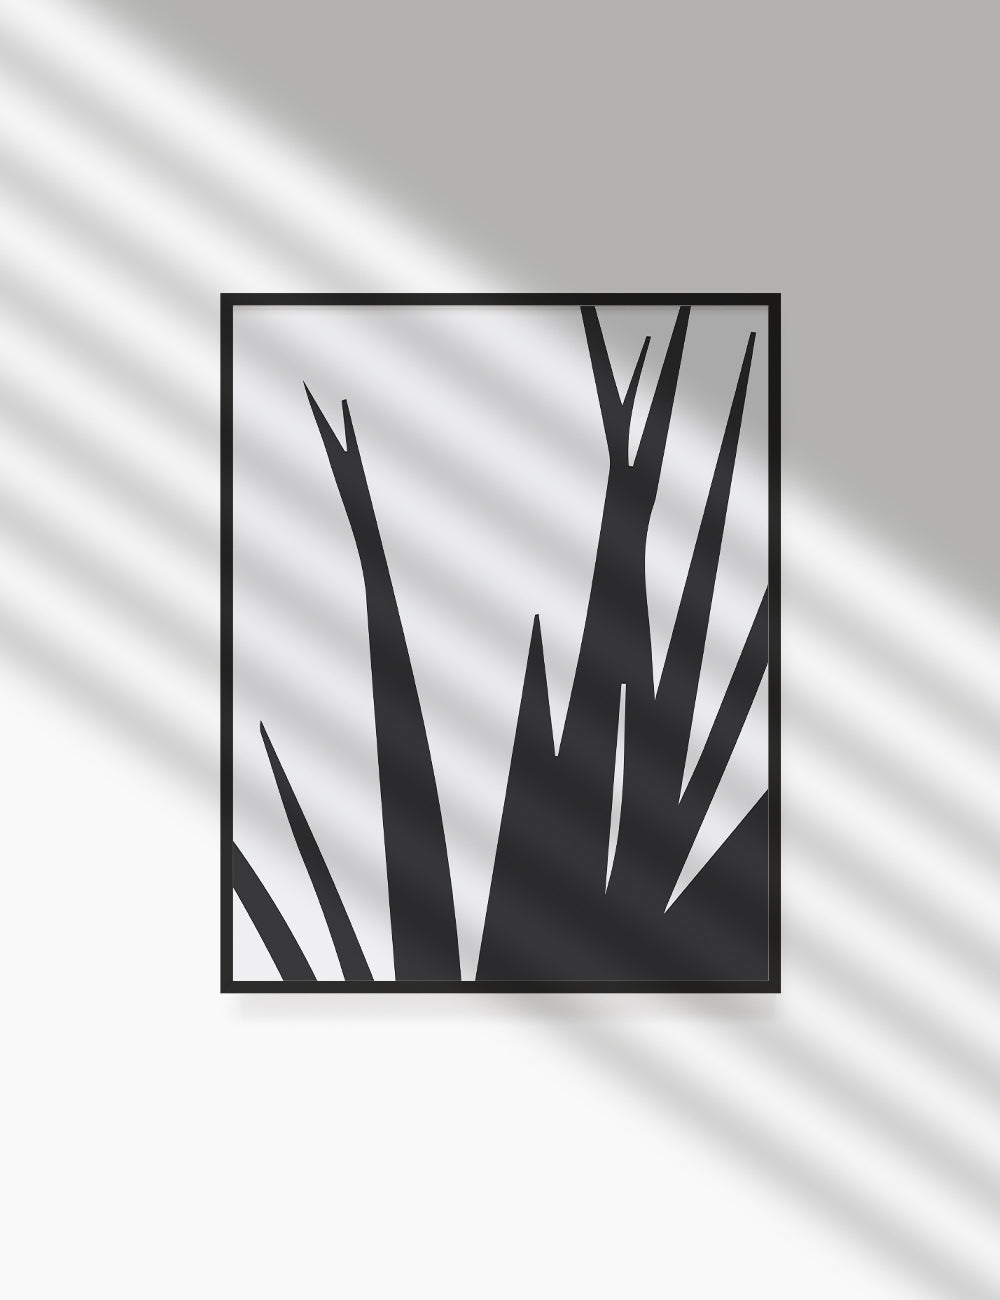 LEAVES. GRASS. MINIMALIST BOTANICAL BOHO ART. BLACK AND WHITE. Minimal Aesthetic. Clean Design. Printable Wall Art Illustration. - PAPER MOON Art & Design